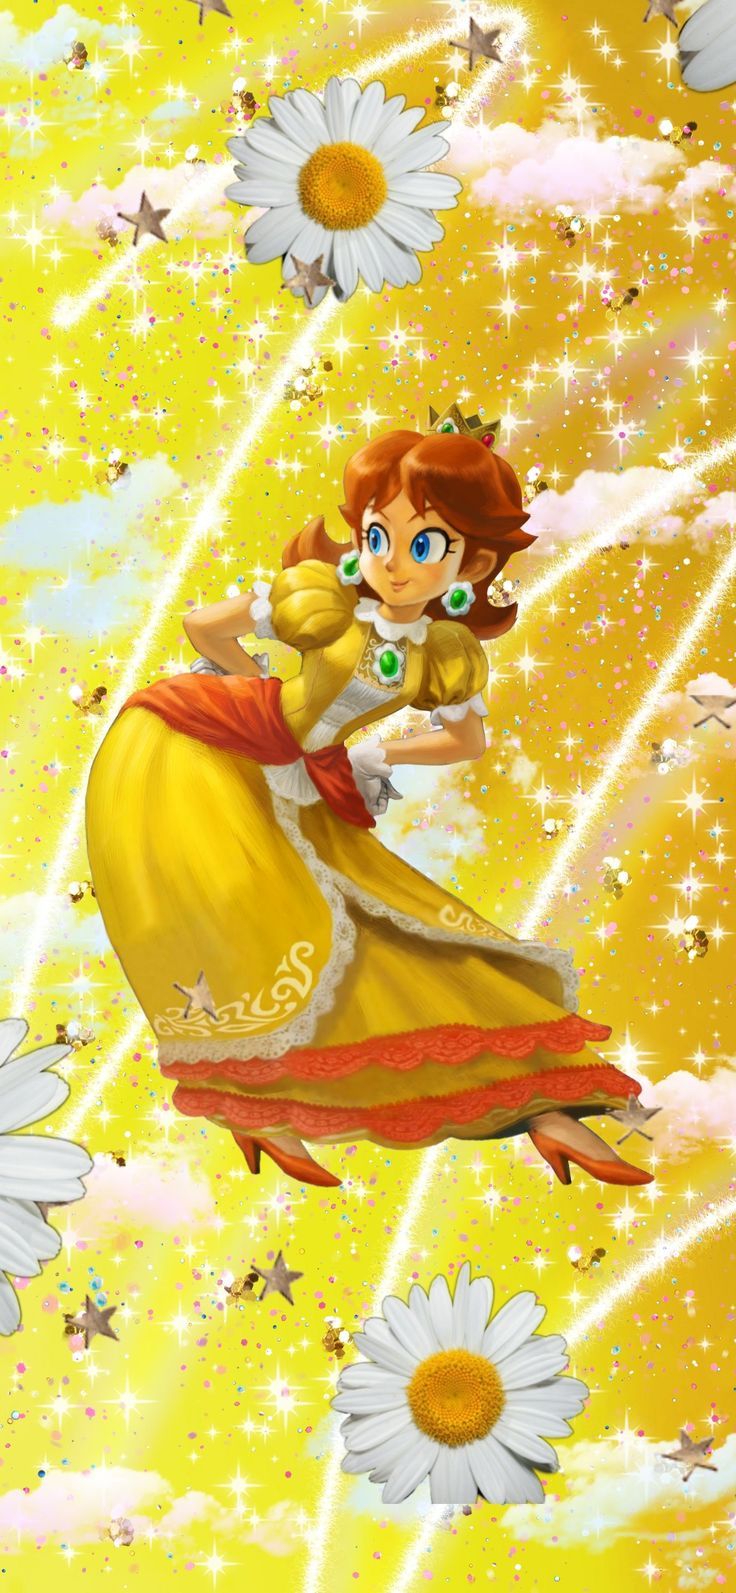 Nintendo Princess Daisy Yellow aesthetic Phone Wallpaper. Daisy wallpaper, Daisy drawing, Princess wallpaper